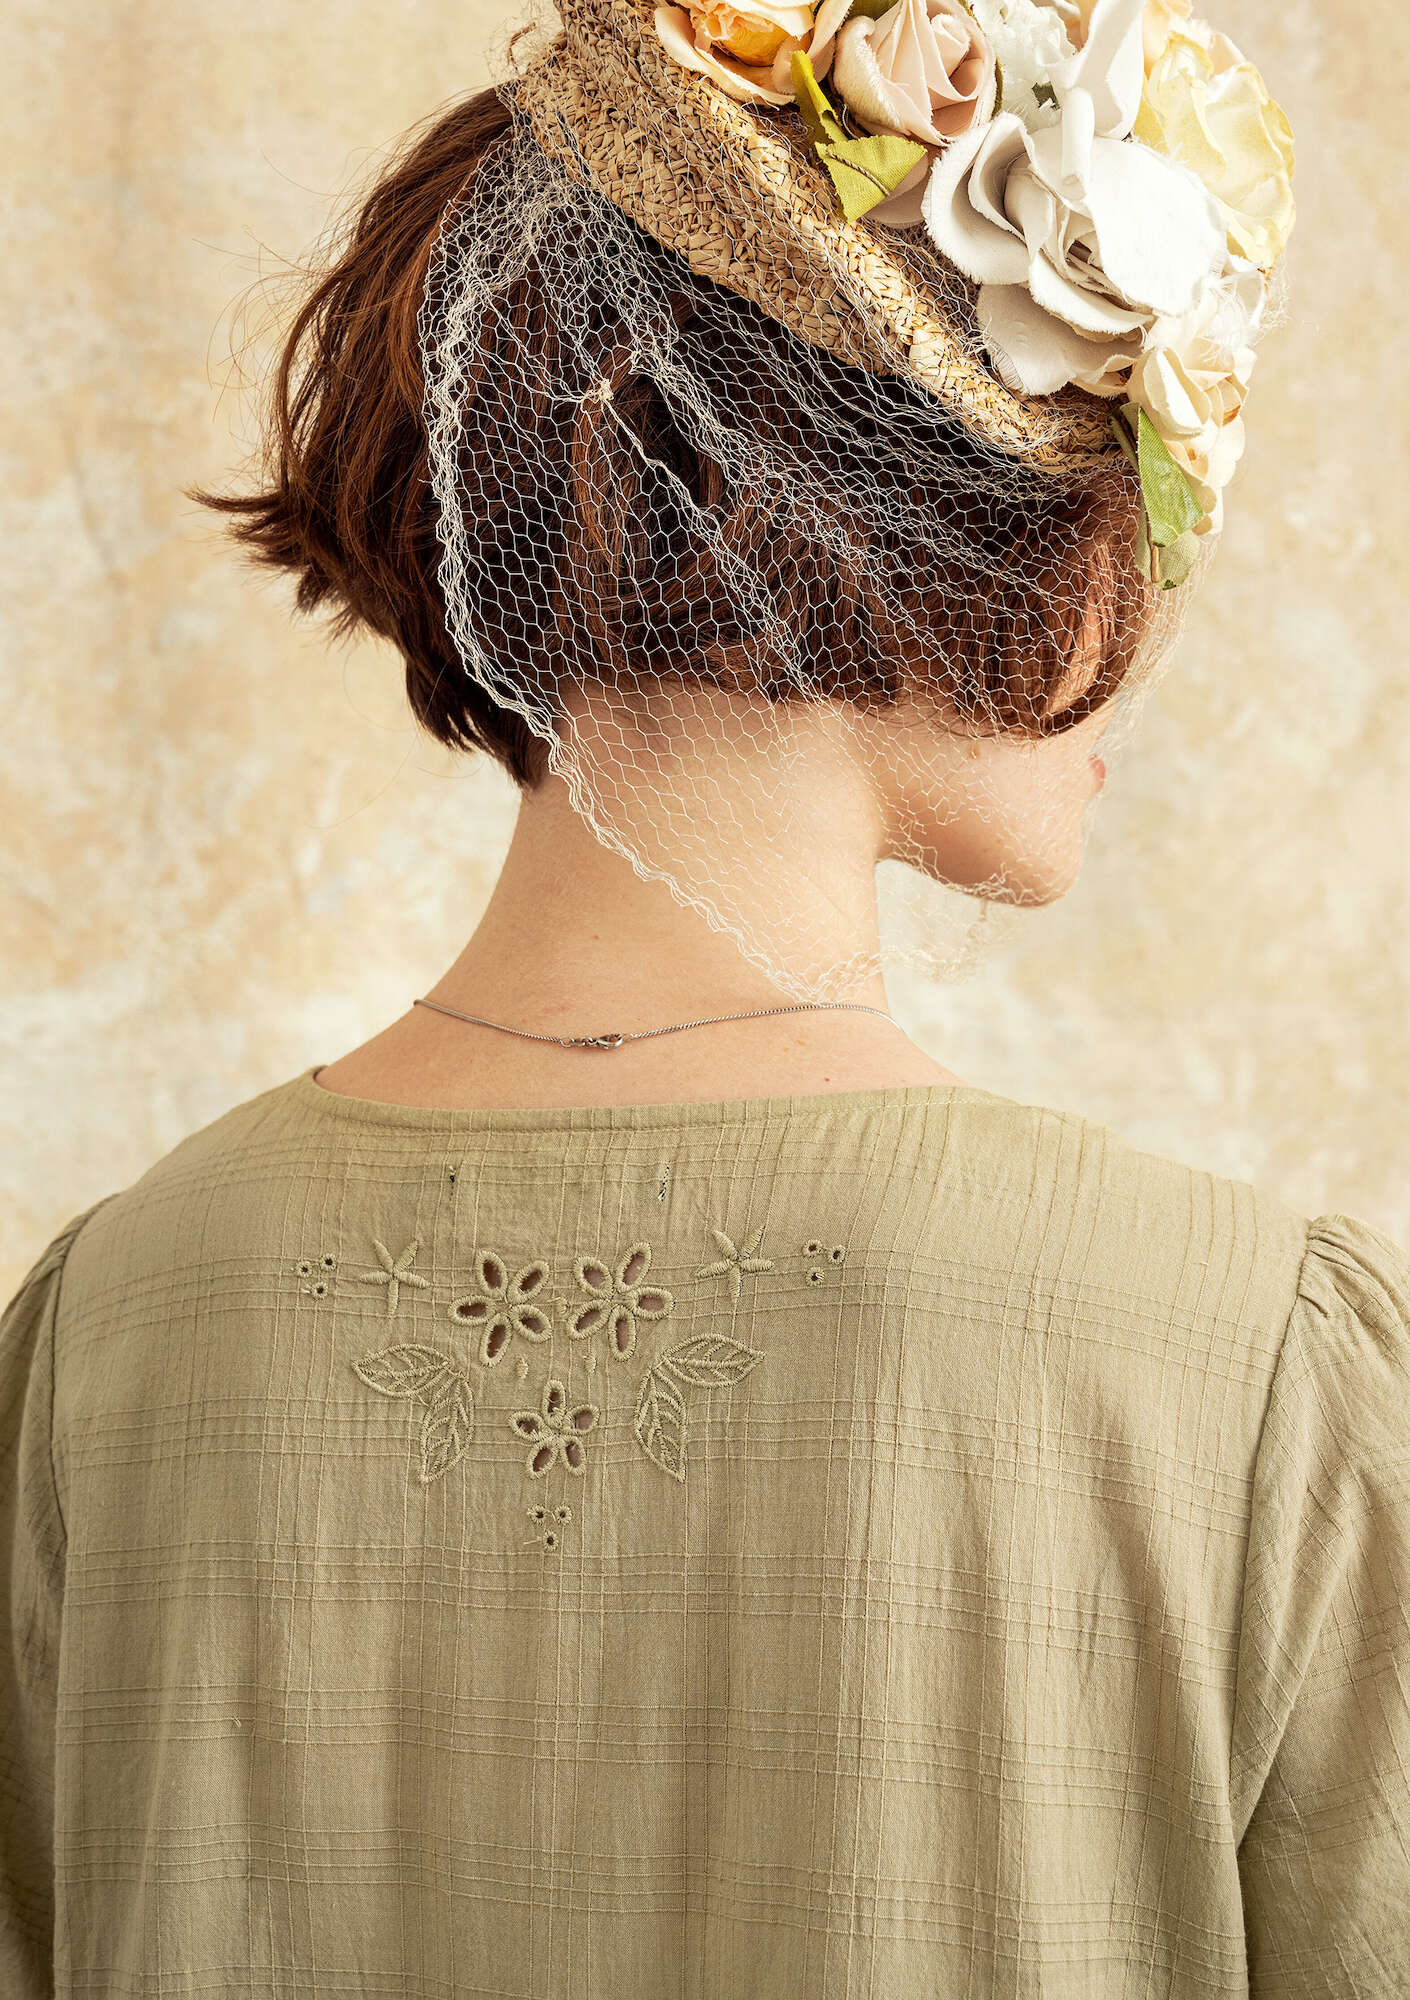 Woven “Tania” dress in organic cotton timothy grass